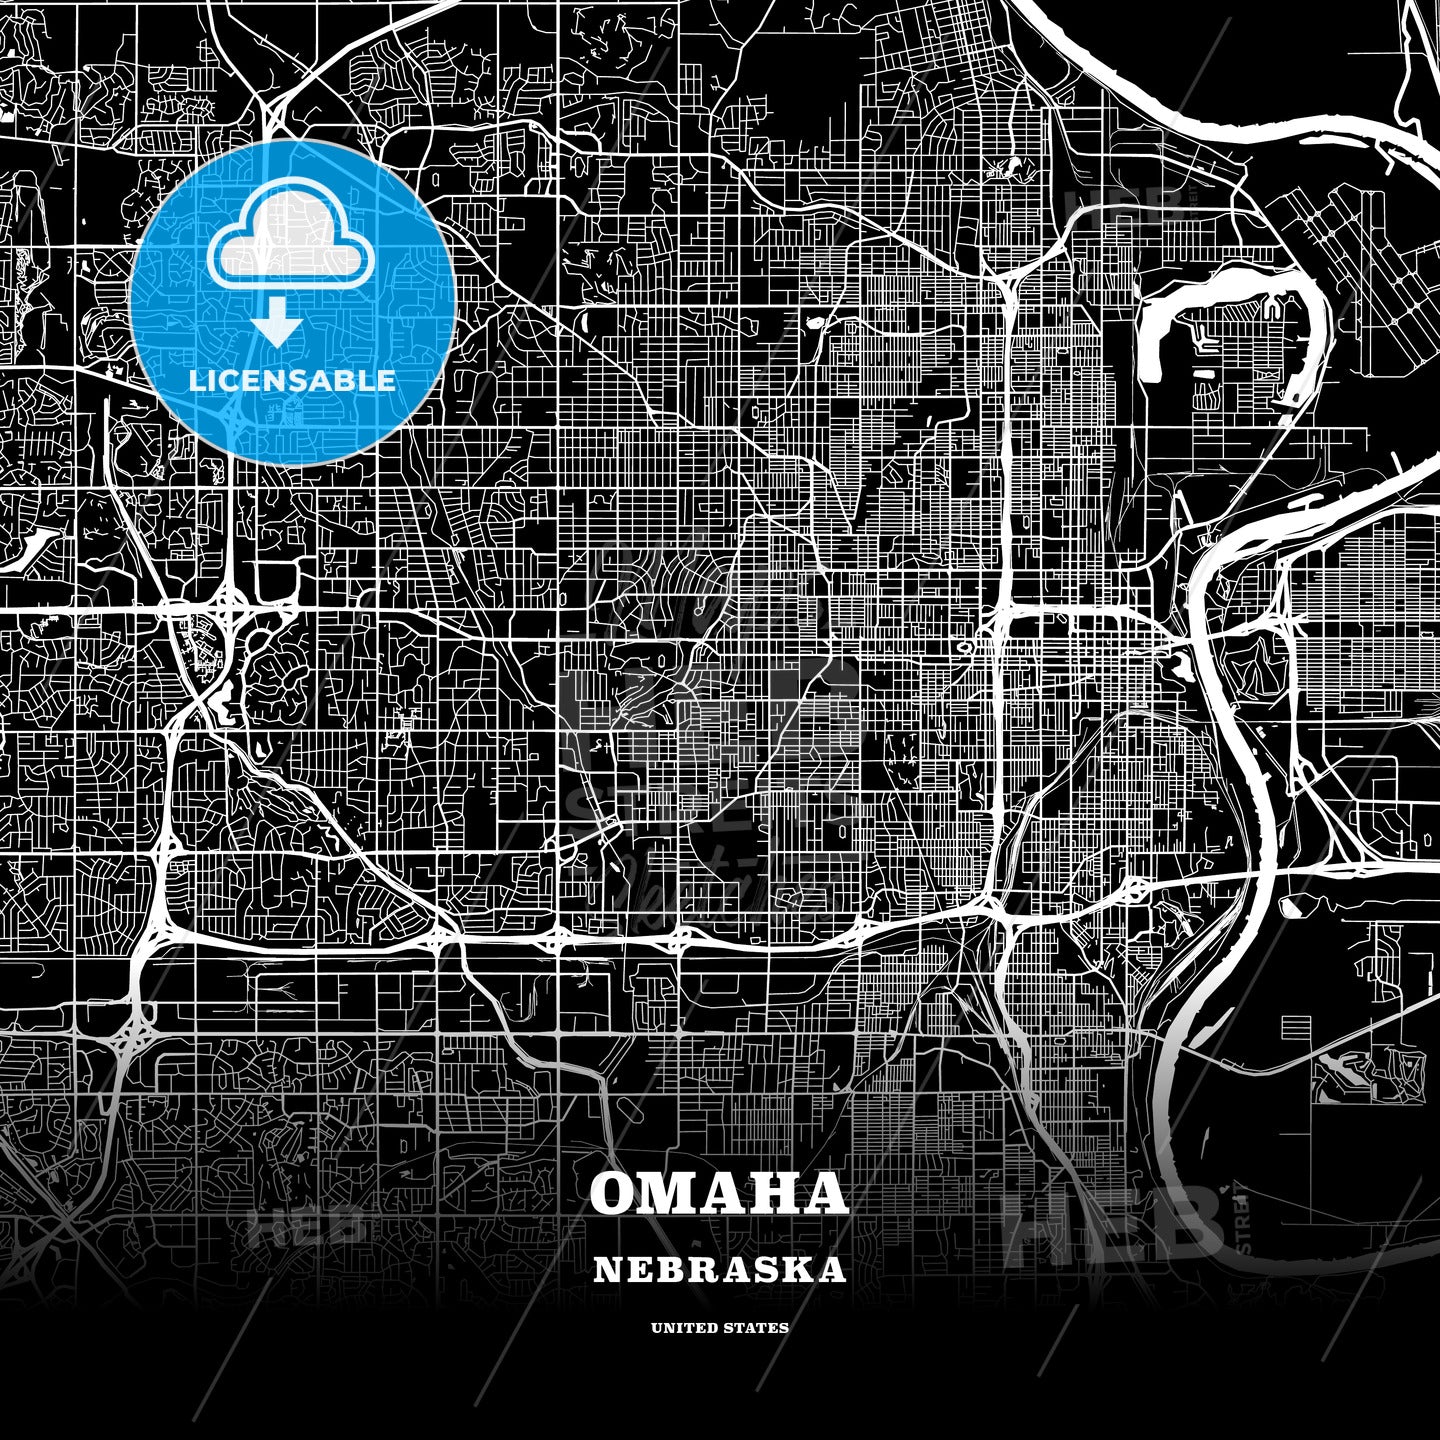 Omaha, Nebraska, USA map